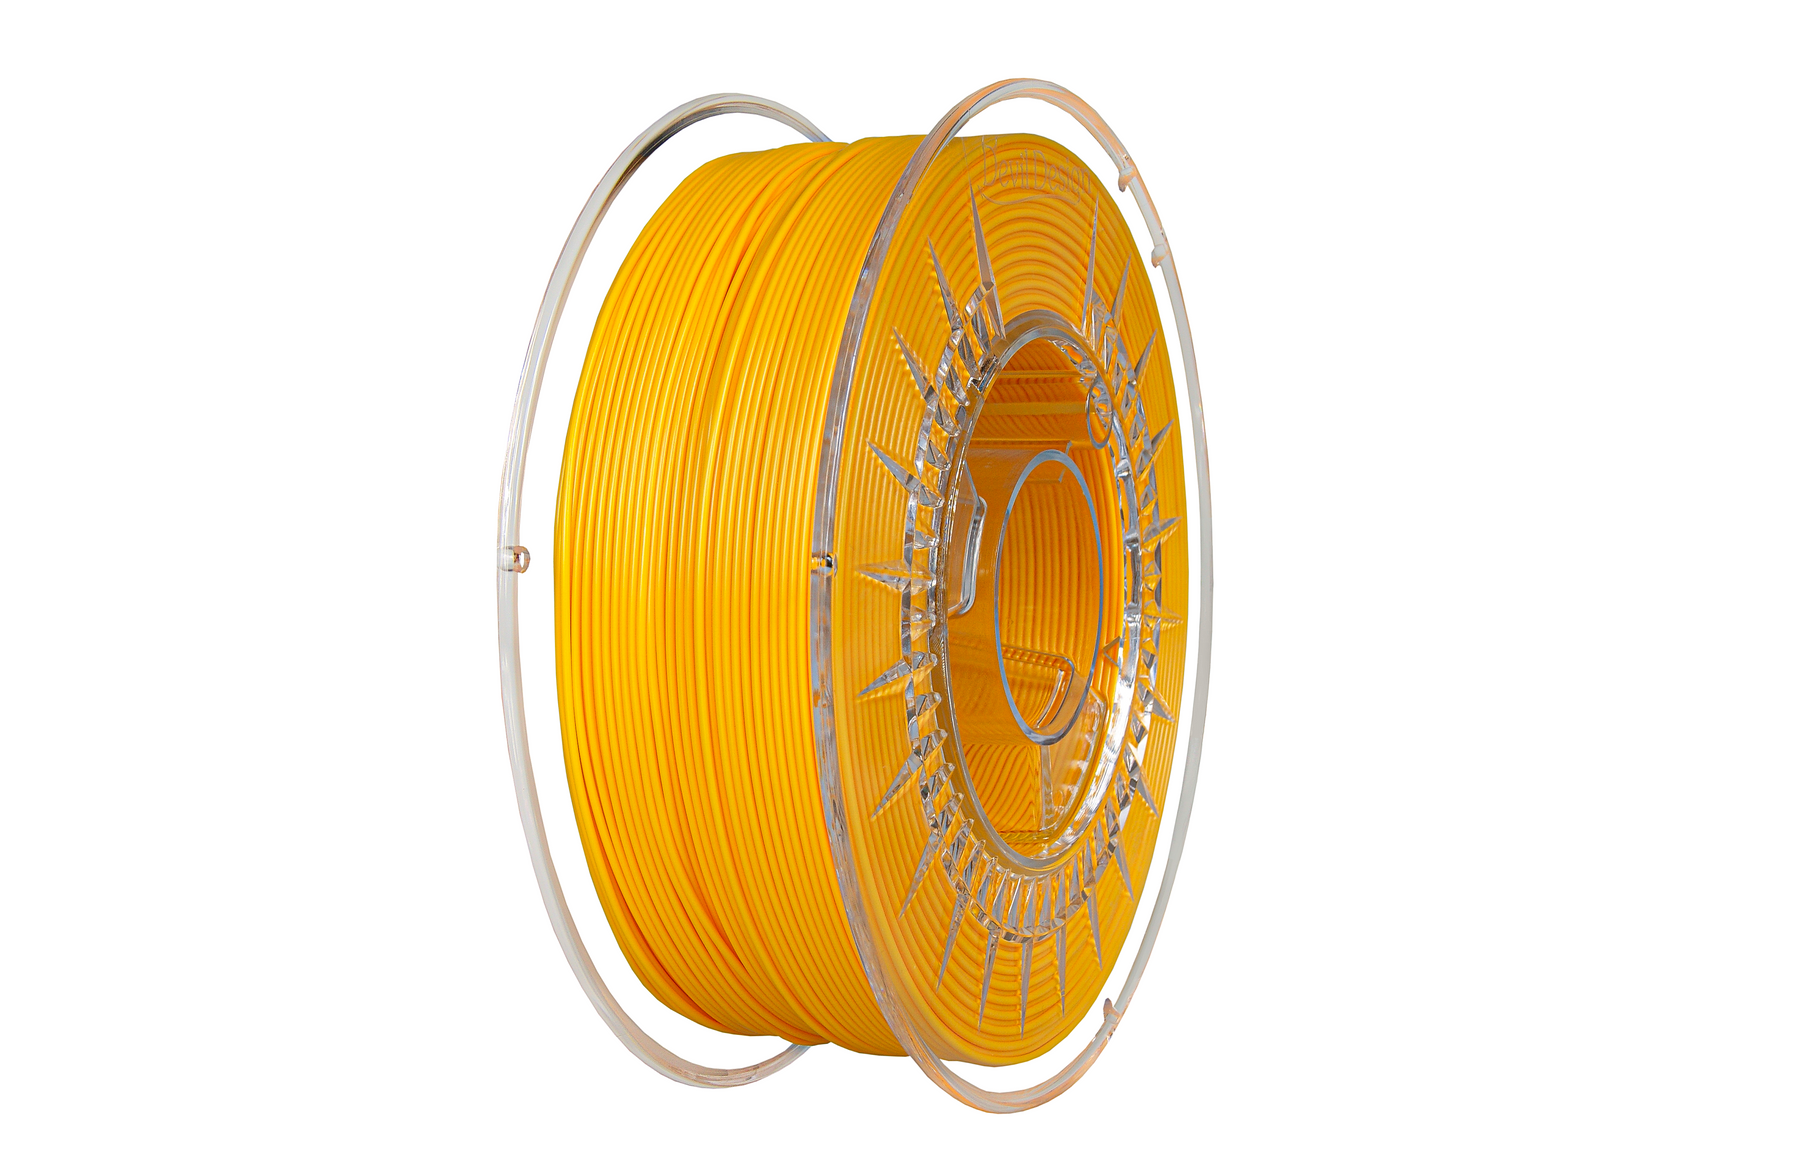 TPU Filament | 1.75mm | 1 KG | Devil Design | 3D Druck Filament